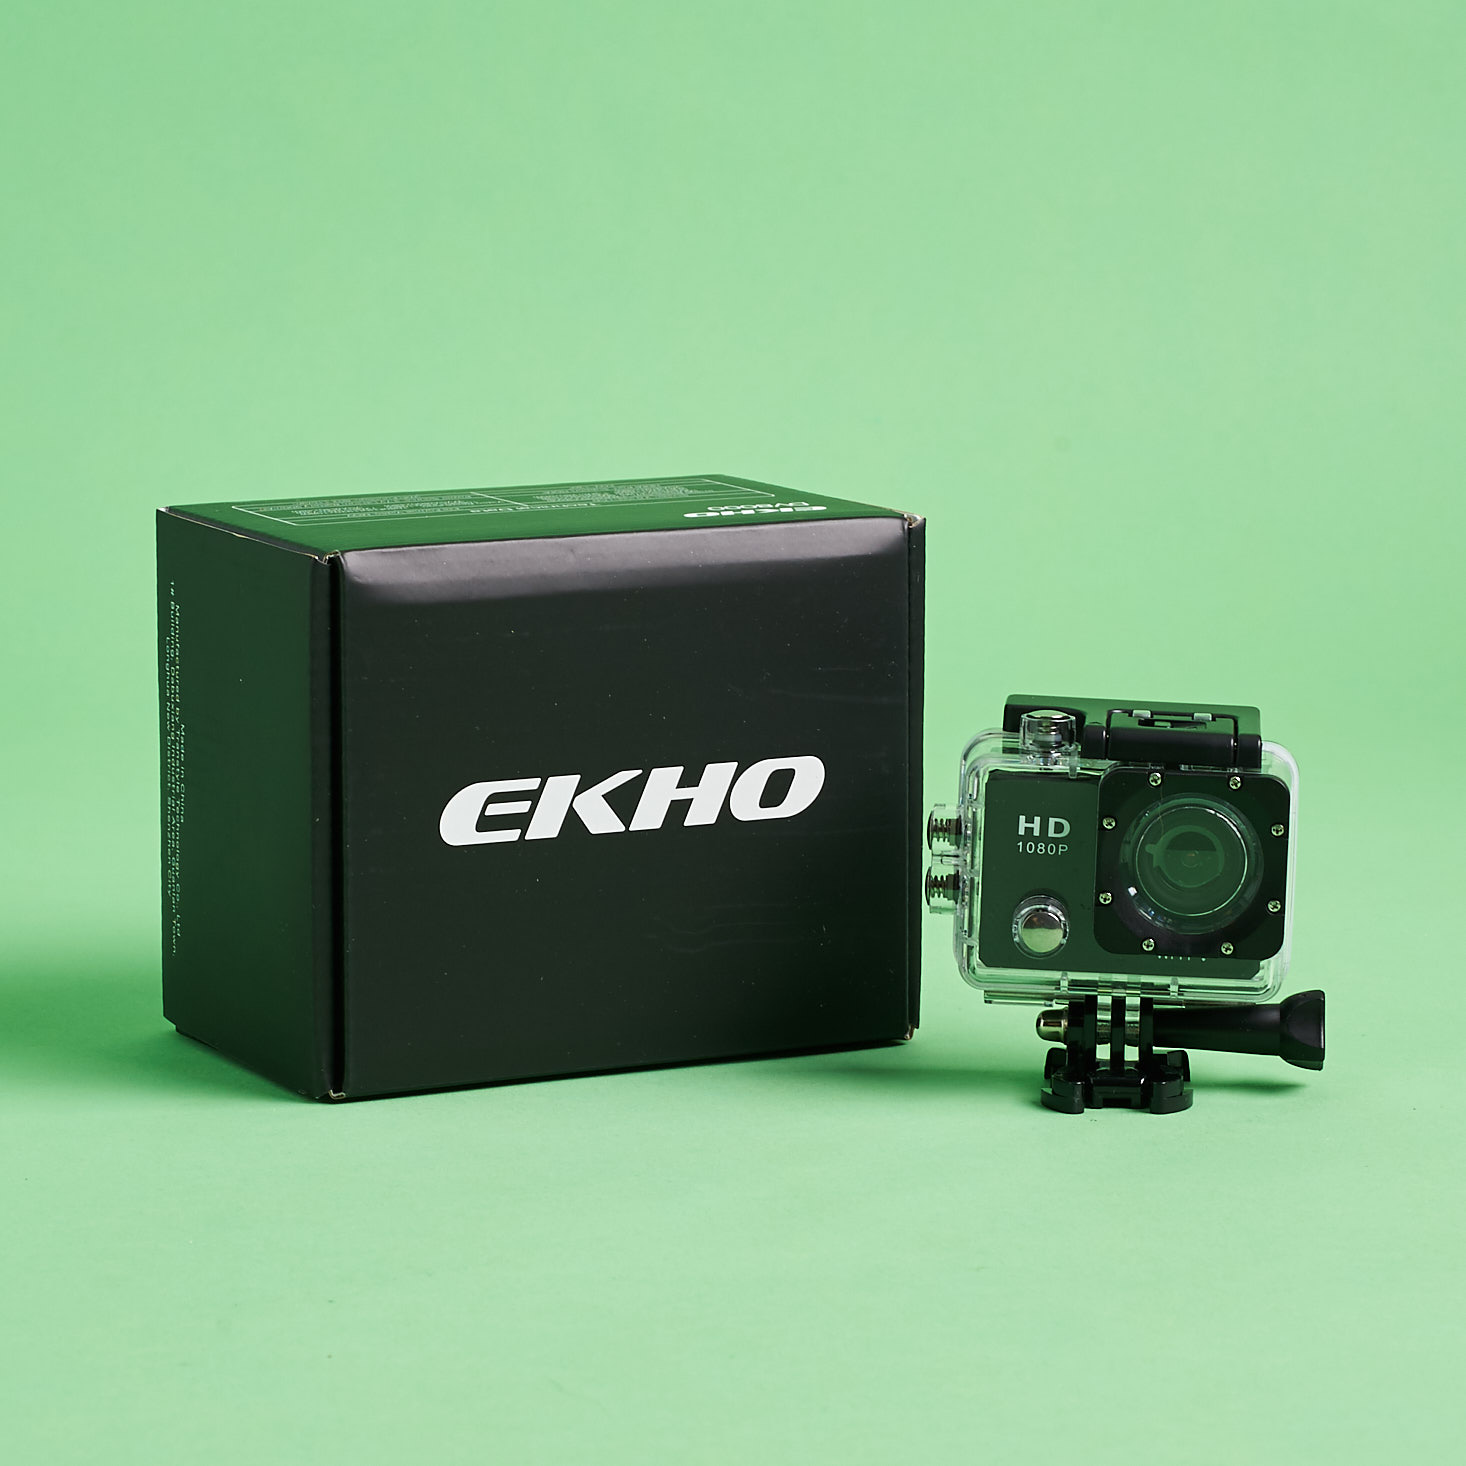 Ekho DV8000 1080P Action Camera with box